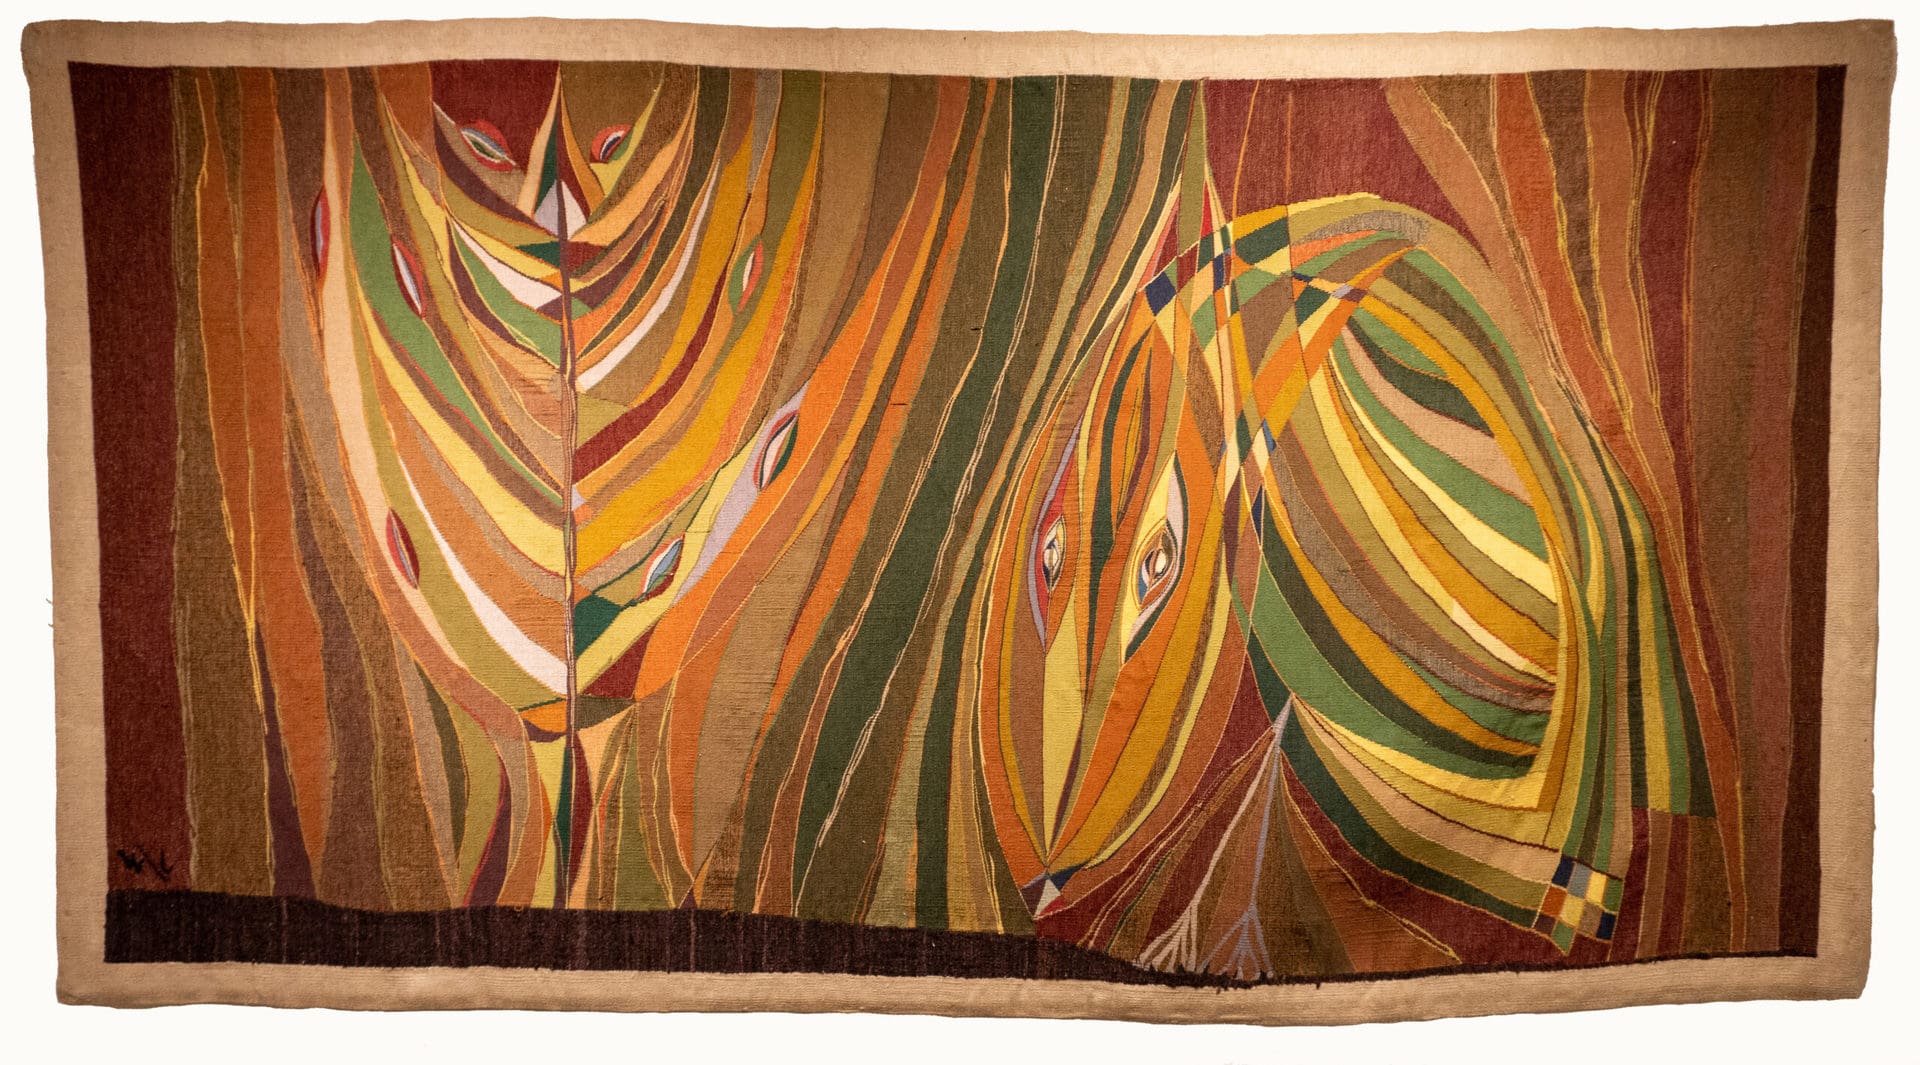 Asger Jorn & Pierre Wemaëre, Fuglen i skove, 1947